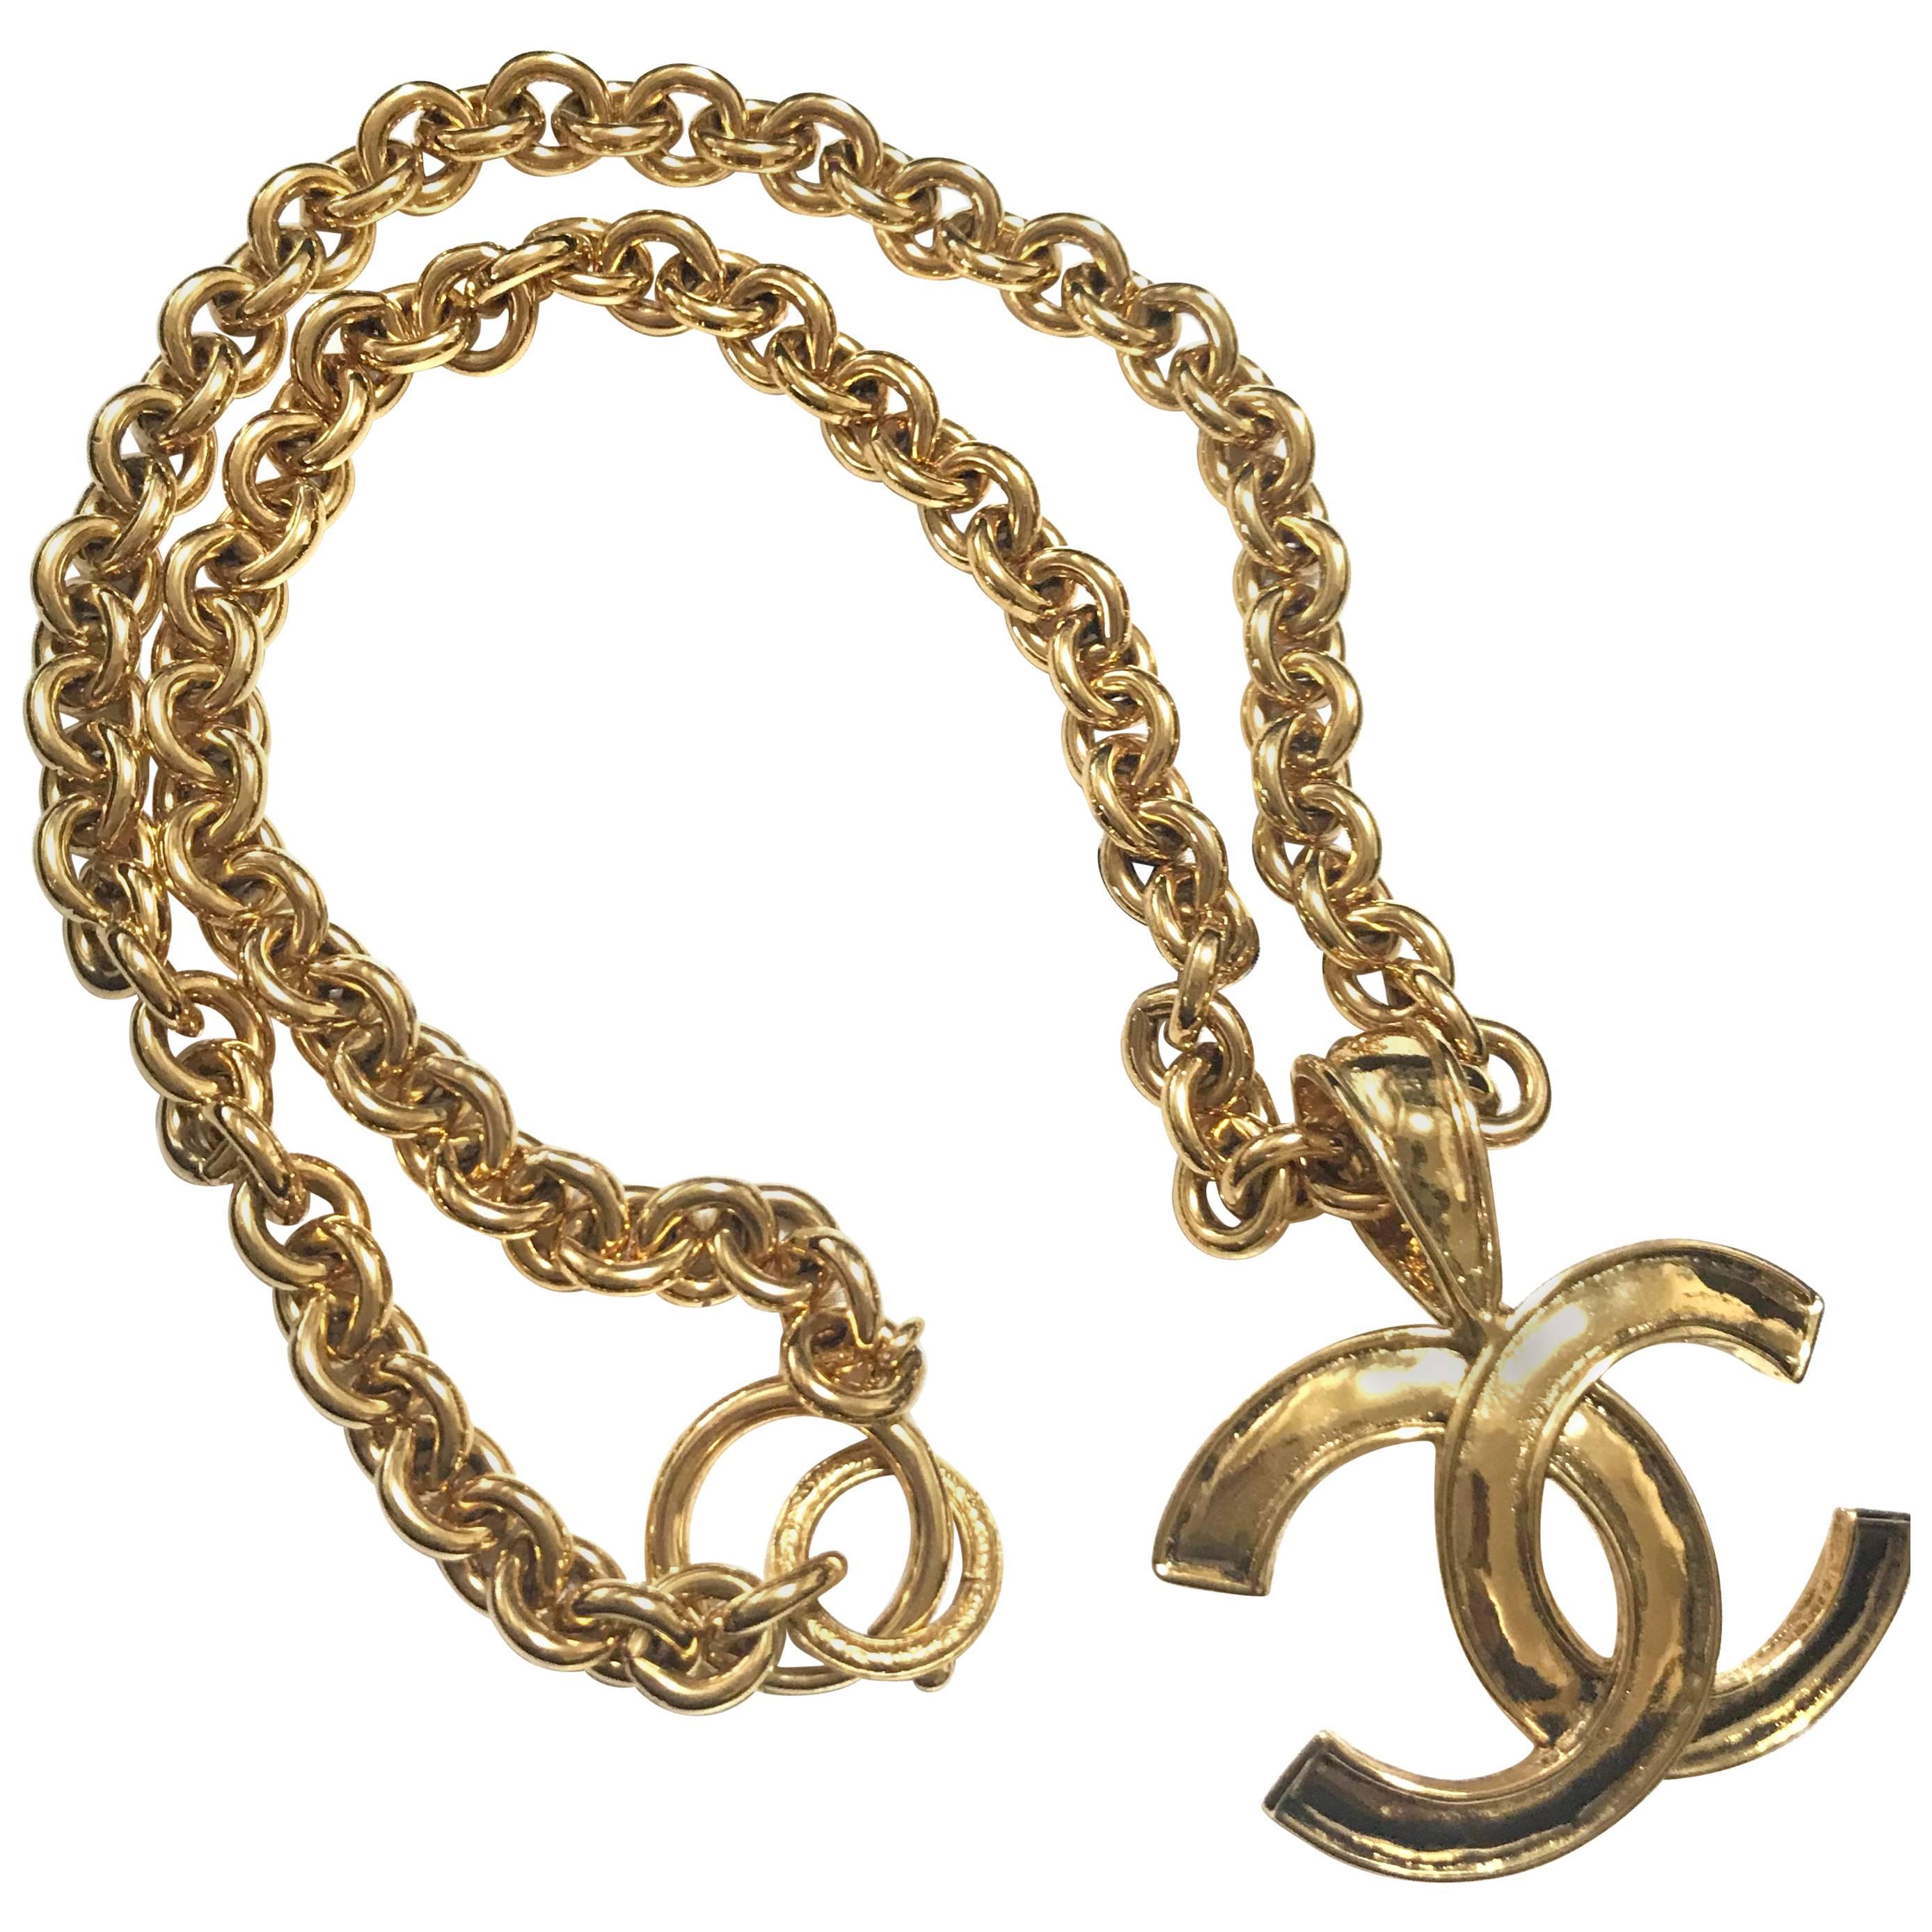 MINT. Vintage CHANEL golden chain necklace with large CC mark logo pendant top. 